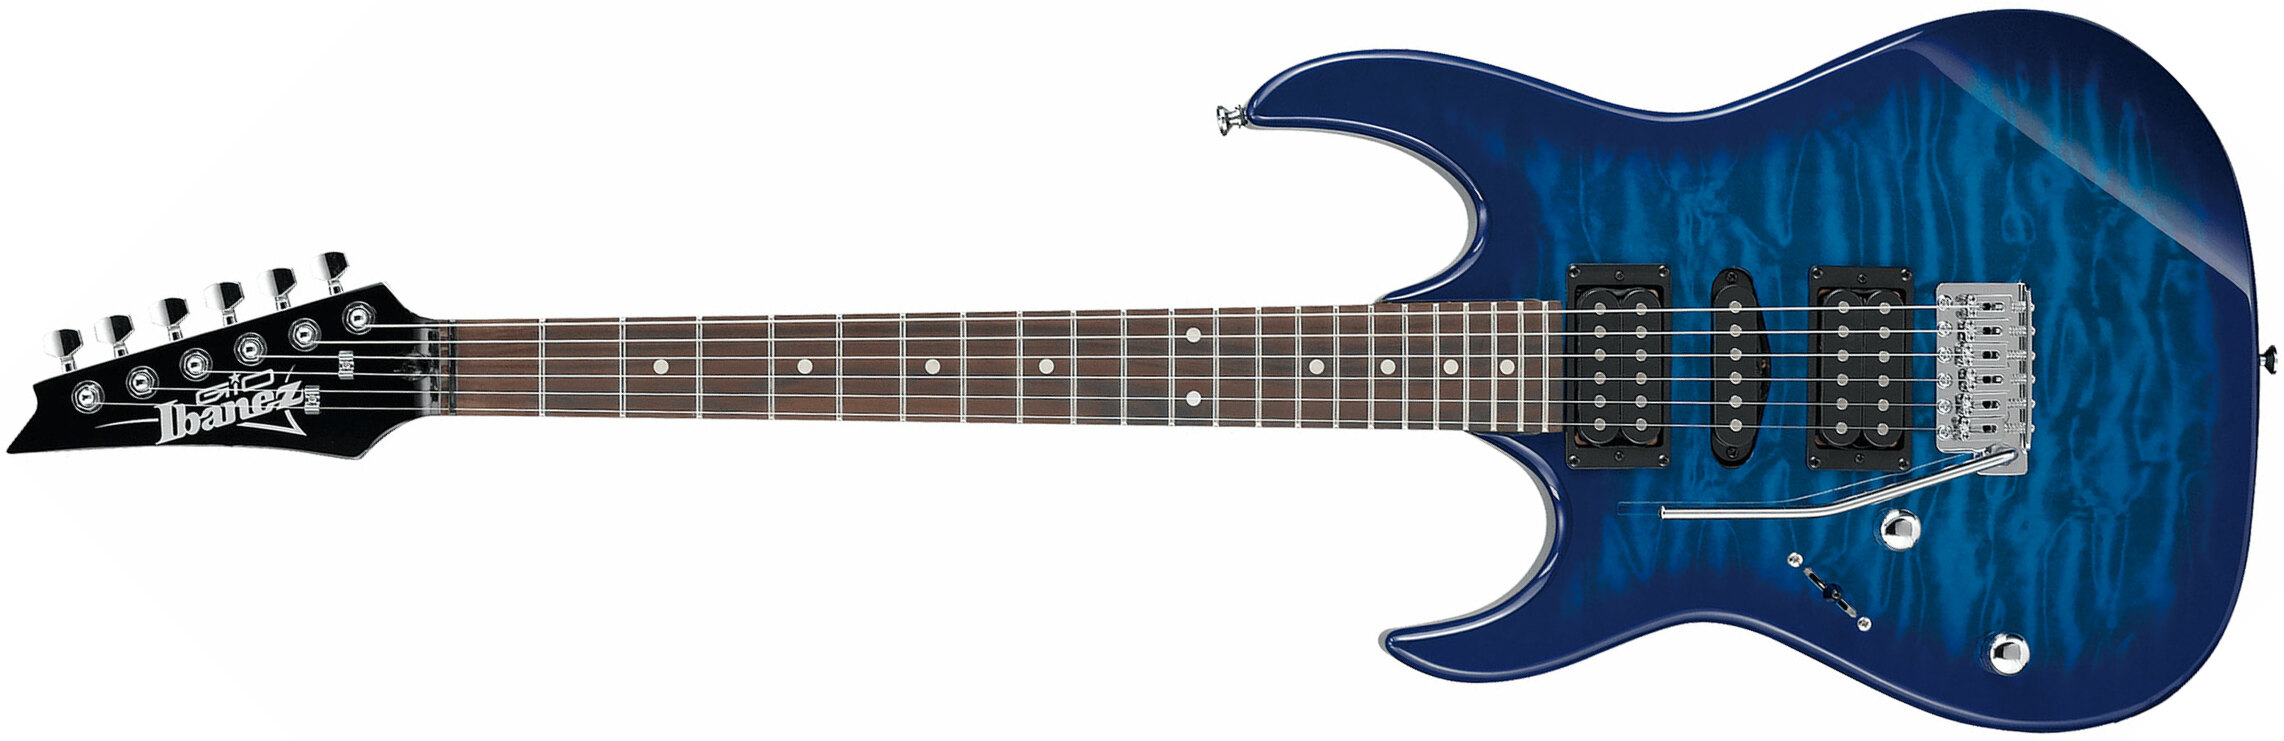 Ibanez Grx70qal Tbb Lh Gaucher Gio Hsh Trem Jat - Transparent Blue Burst - Guitarra electrica para zurdos - Main picture